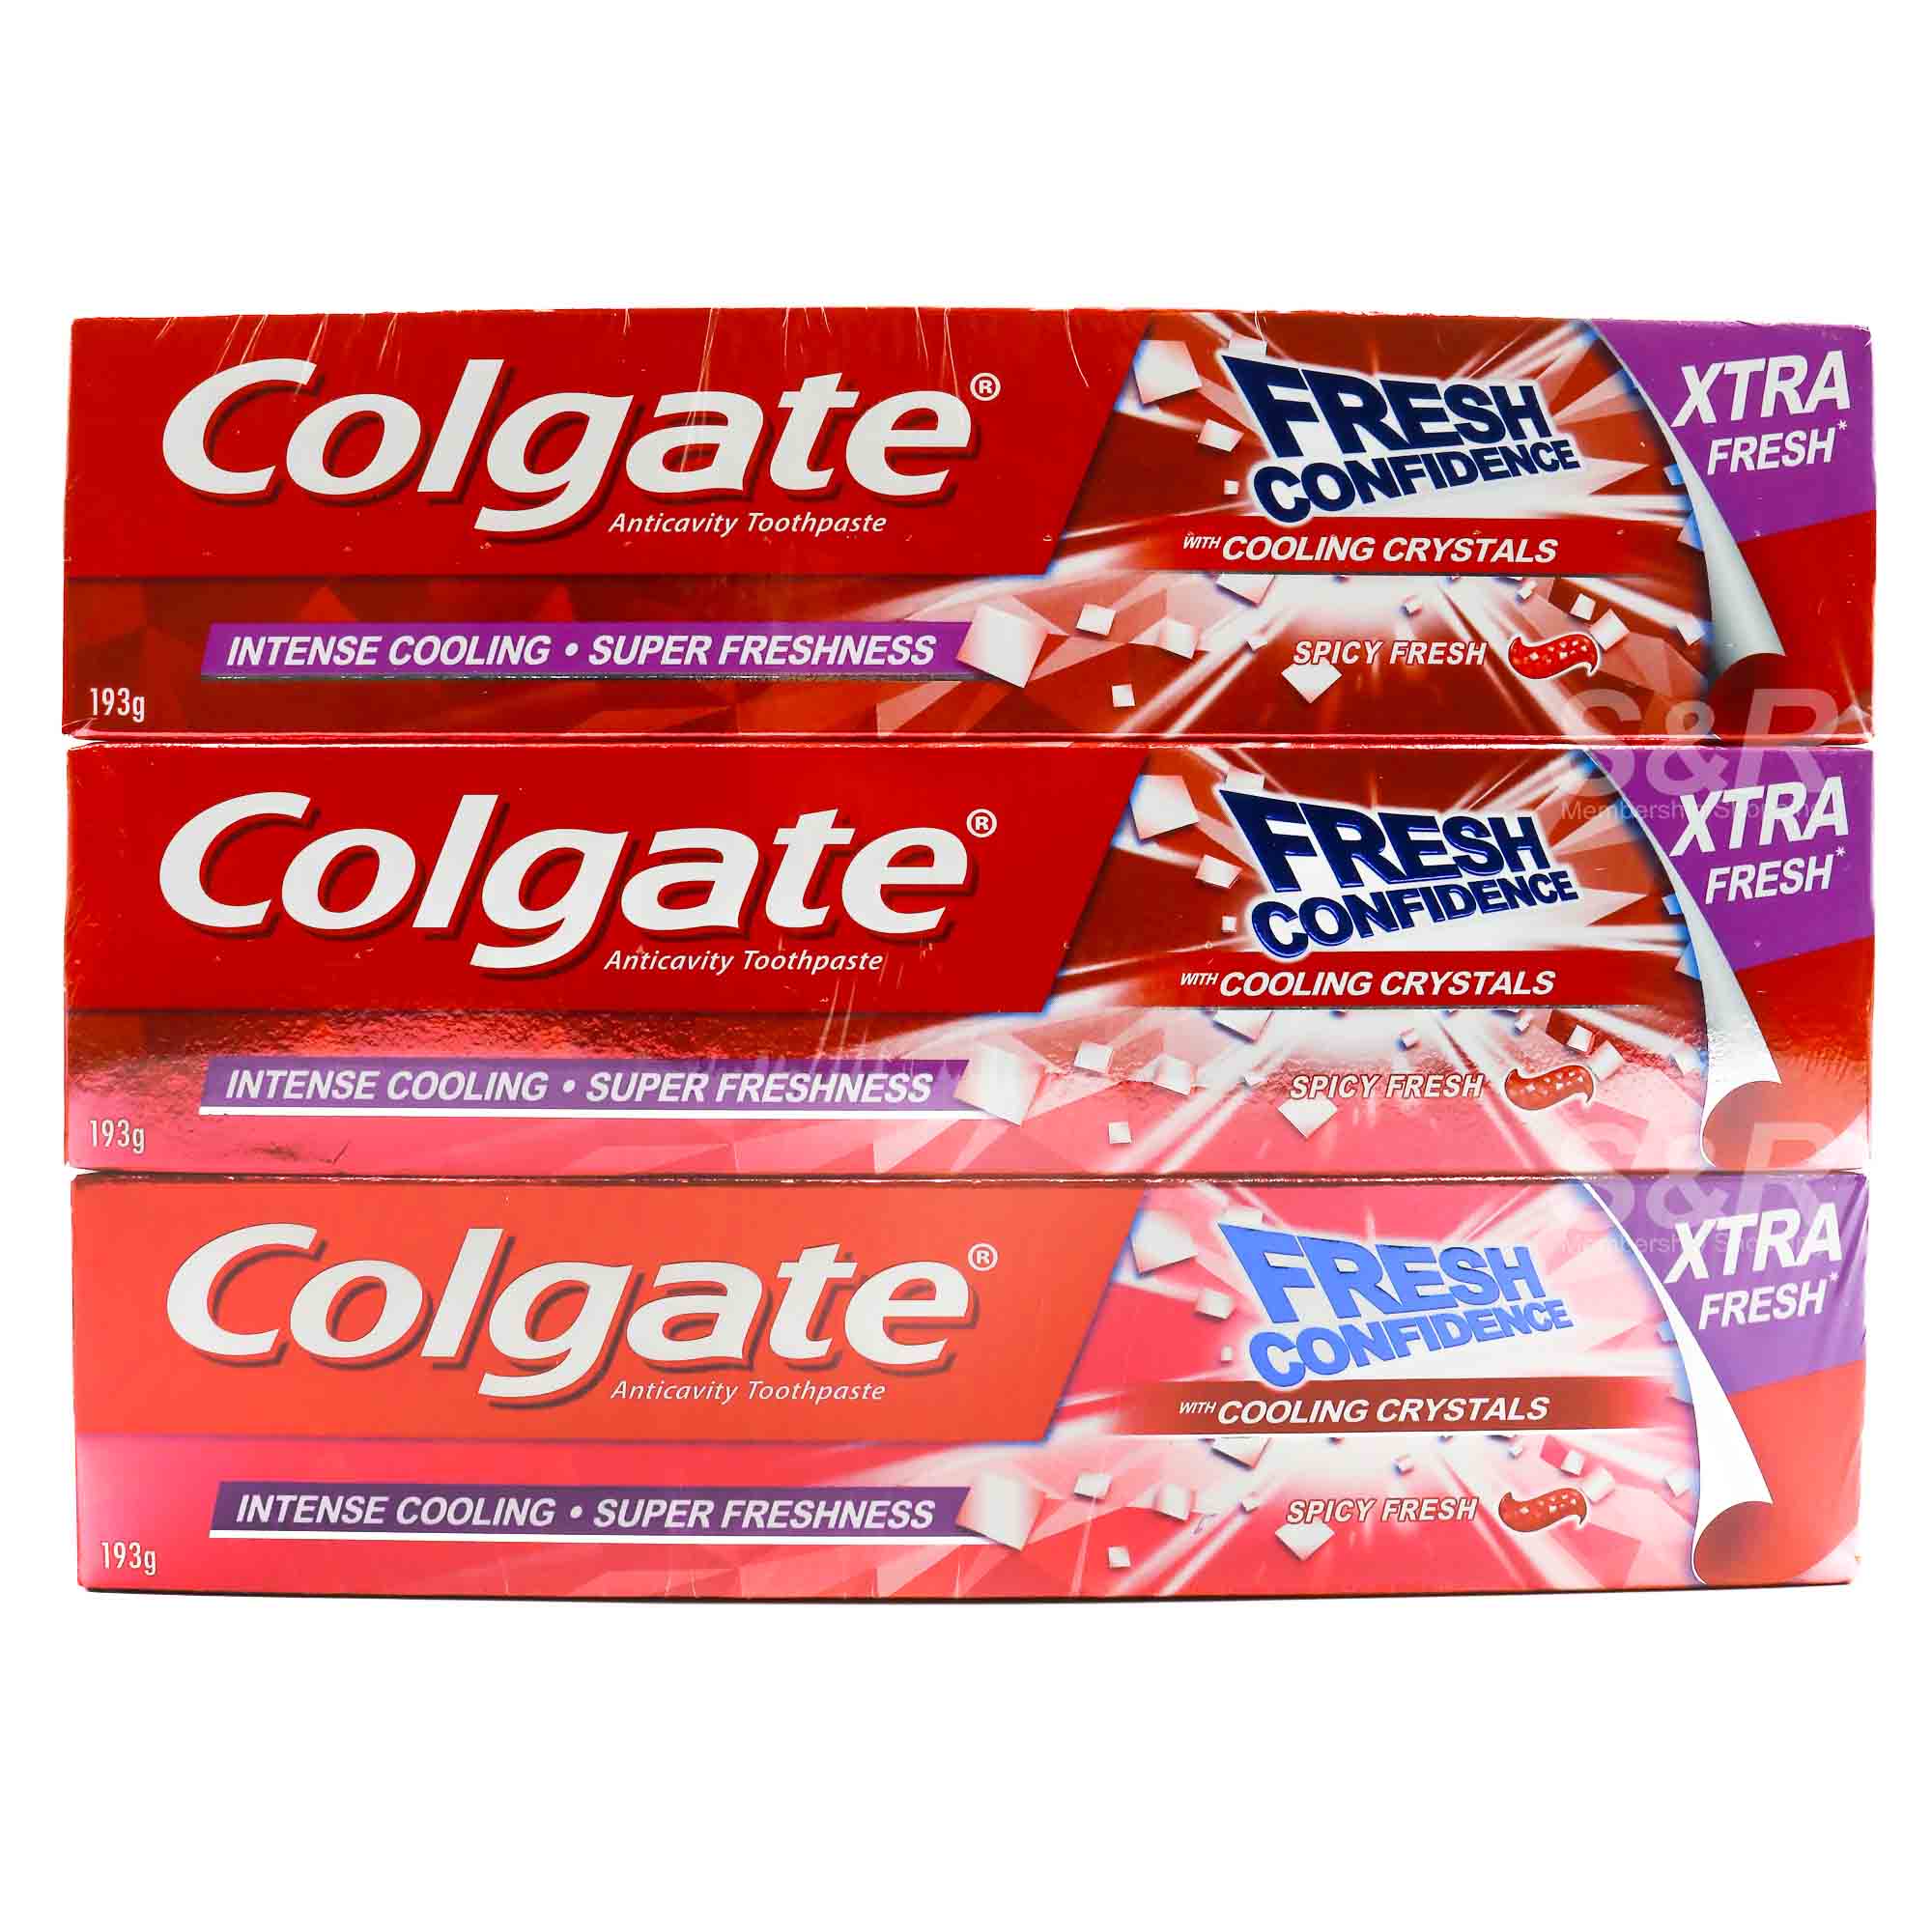 Colgate Fresh Confidence Spicy Fresh Toothpaste 3pcs